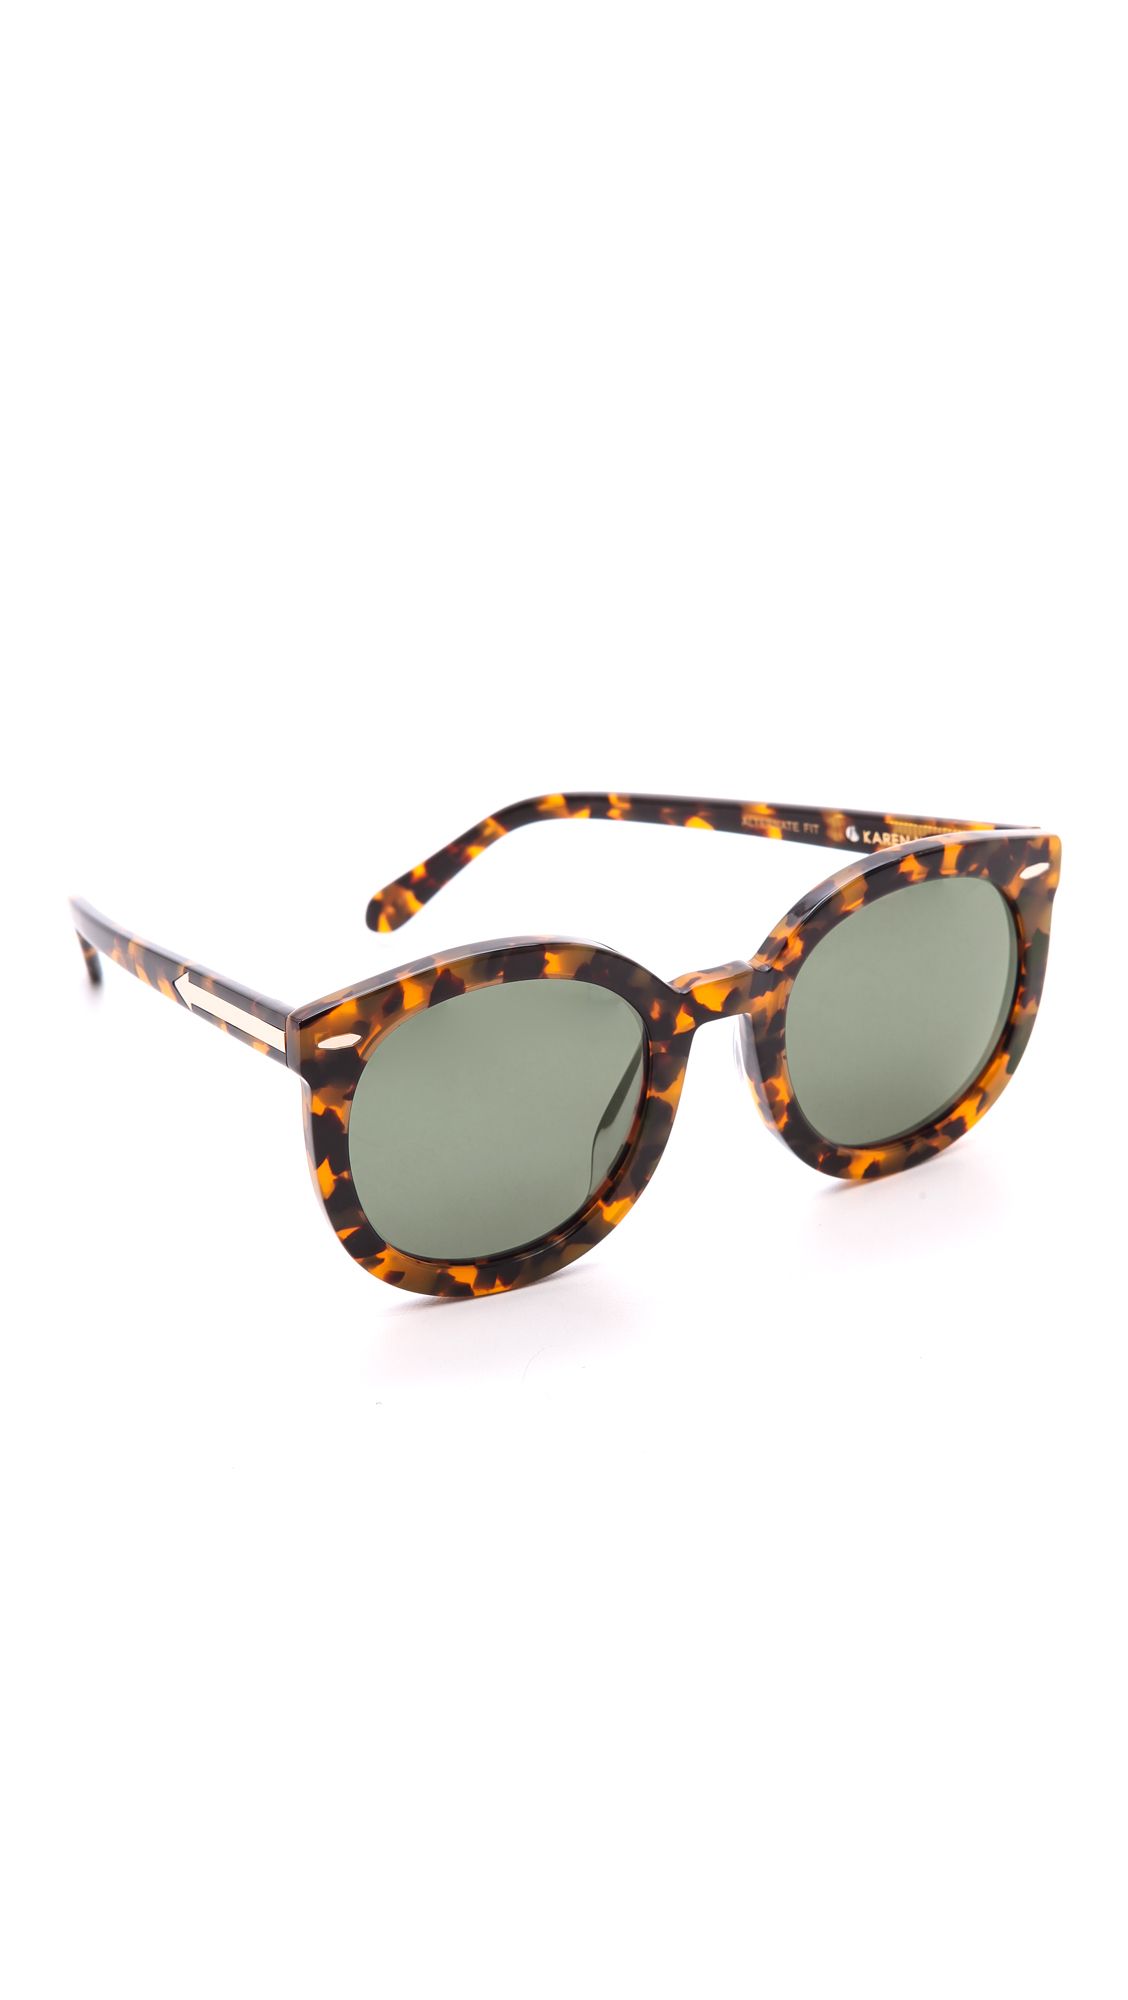 Karen Walker Special Fit Super Duper Strength Sunglasses - Crazy Tort/G15 Mono | Shopbop